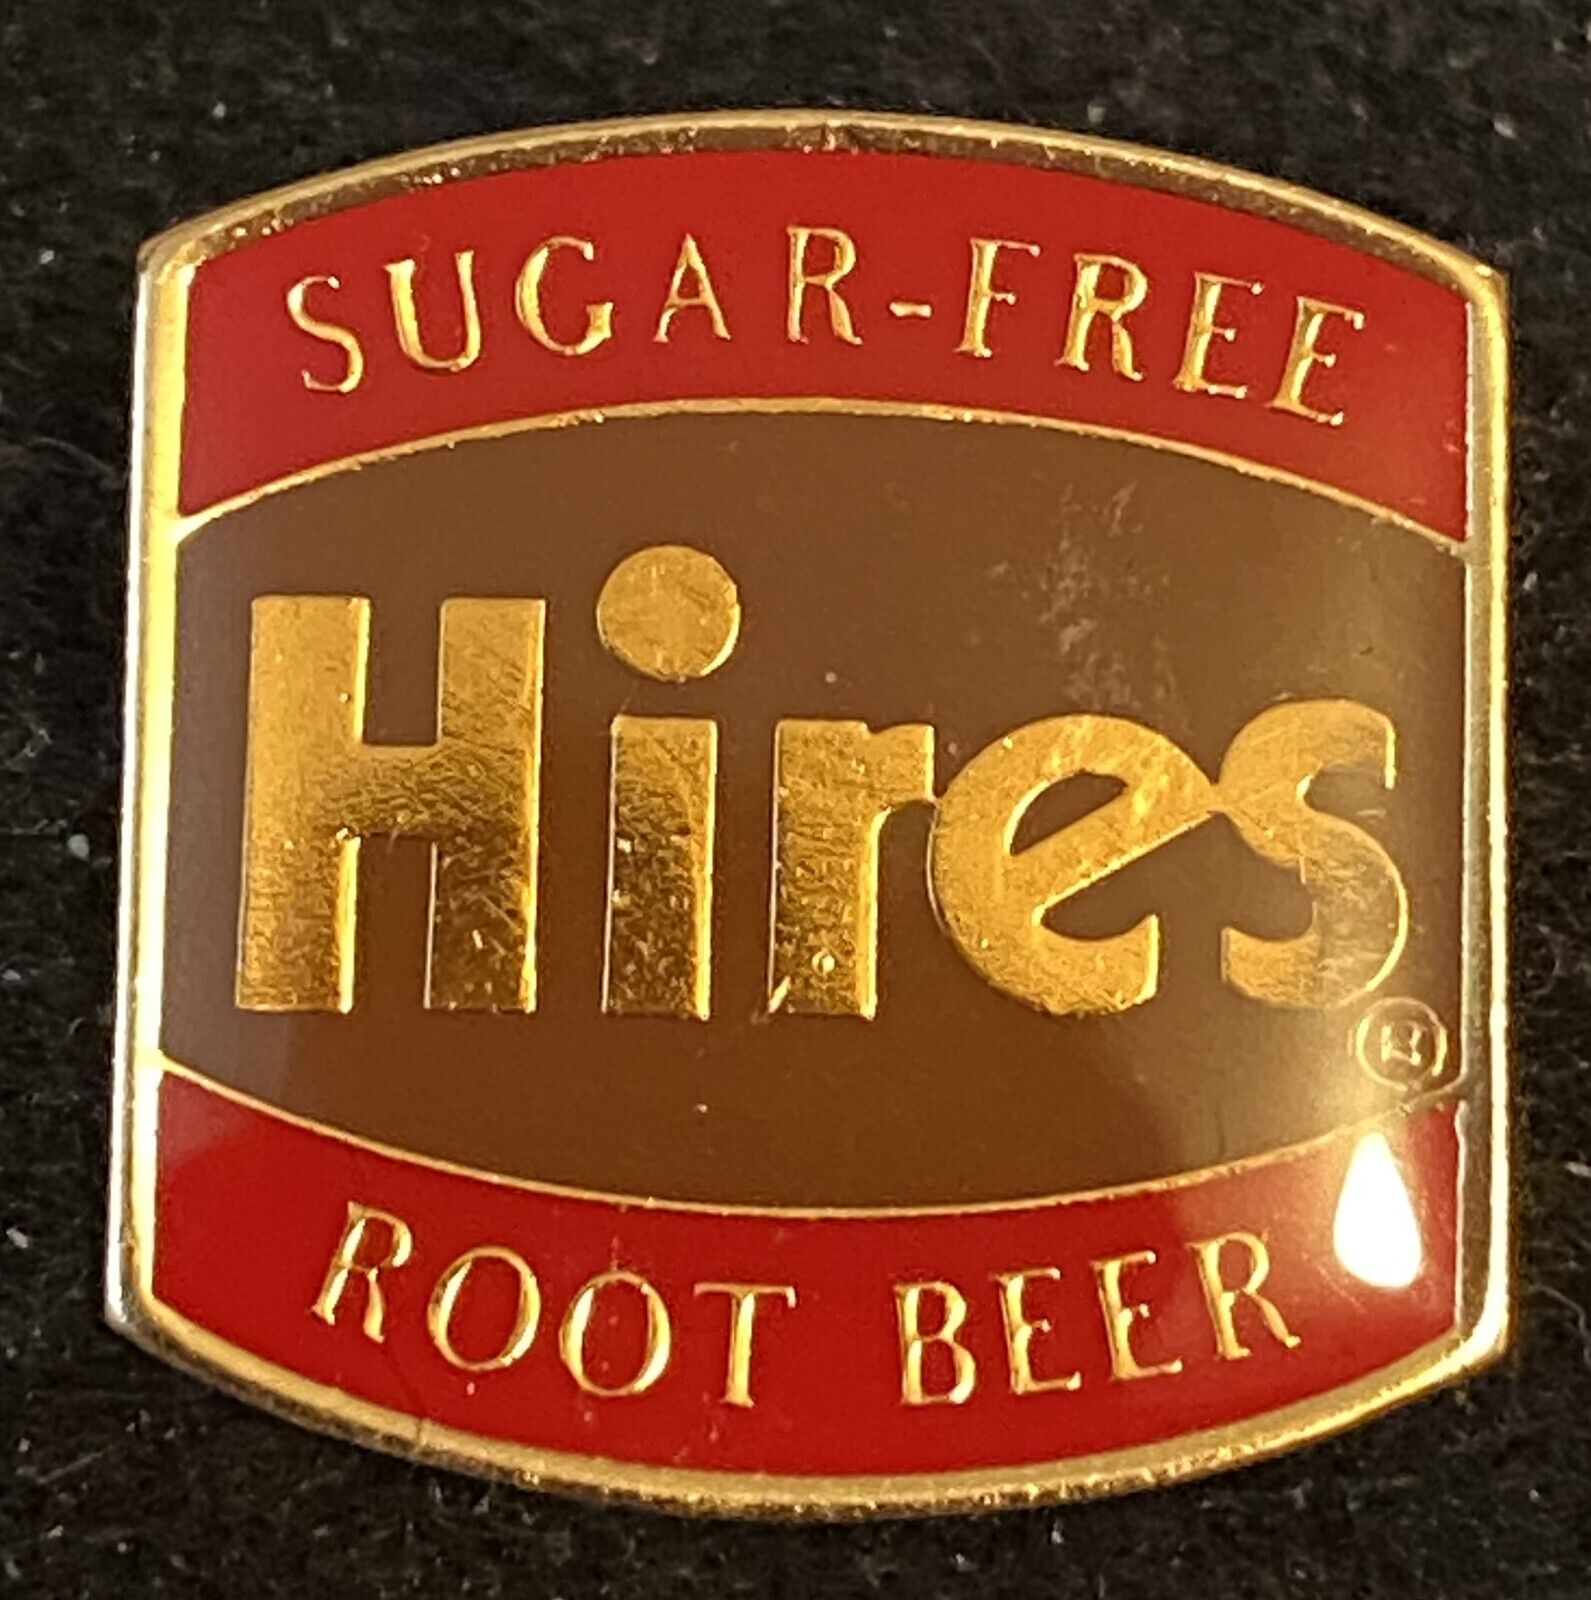 Hires Root Beer Emblem Sugar Free Lapel Pin